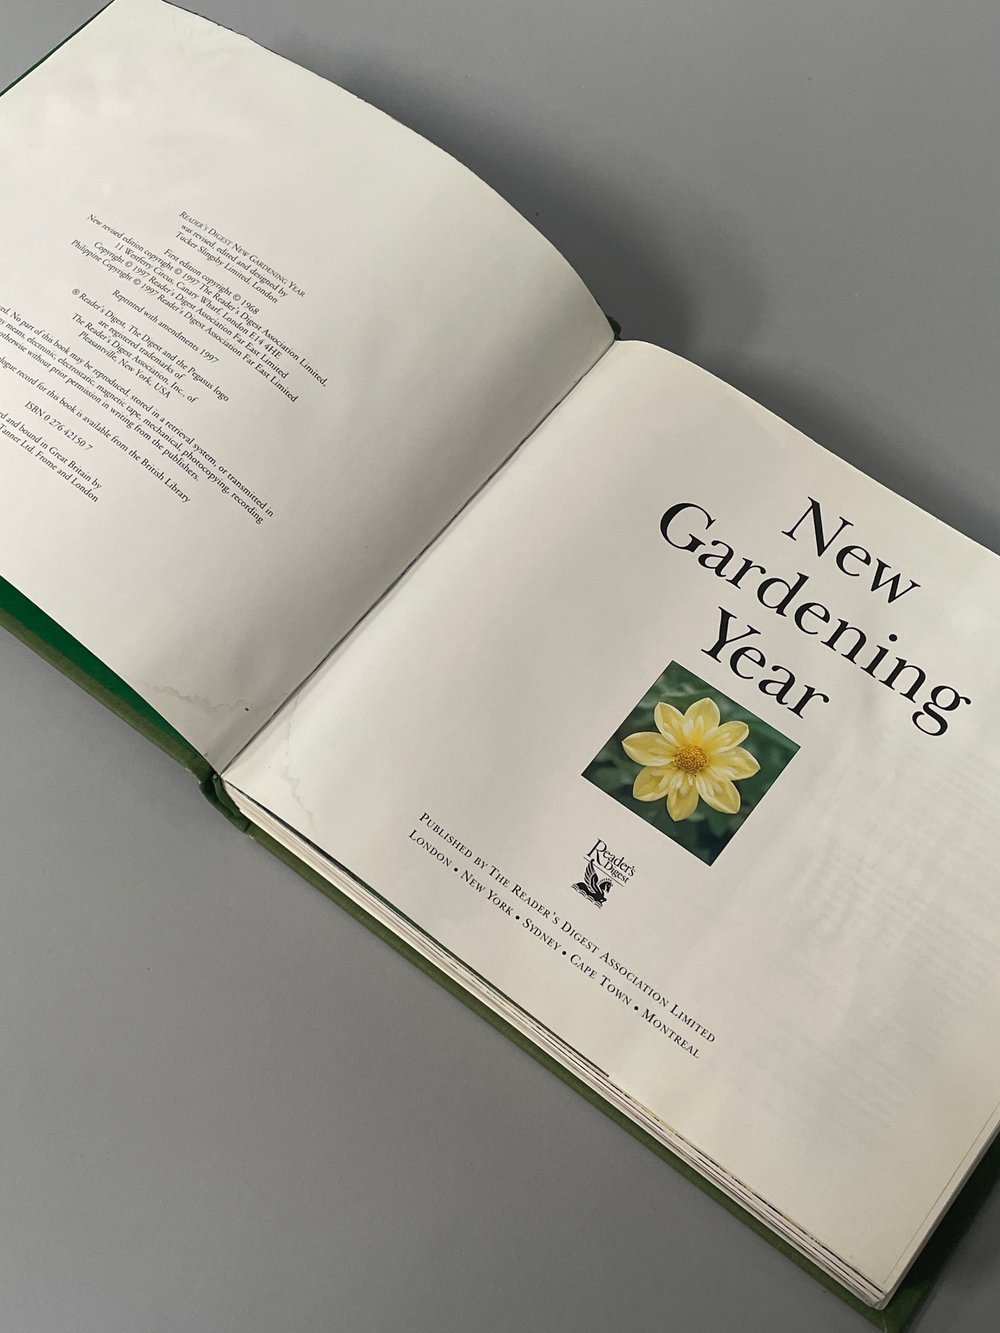 New gardening year by Readers Digest, Gardeners book 